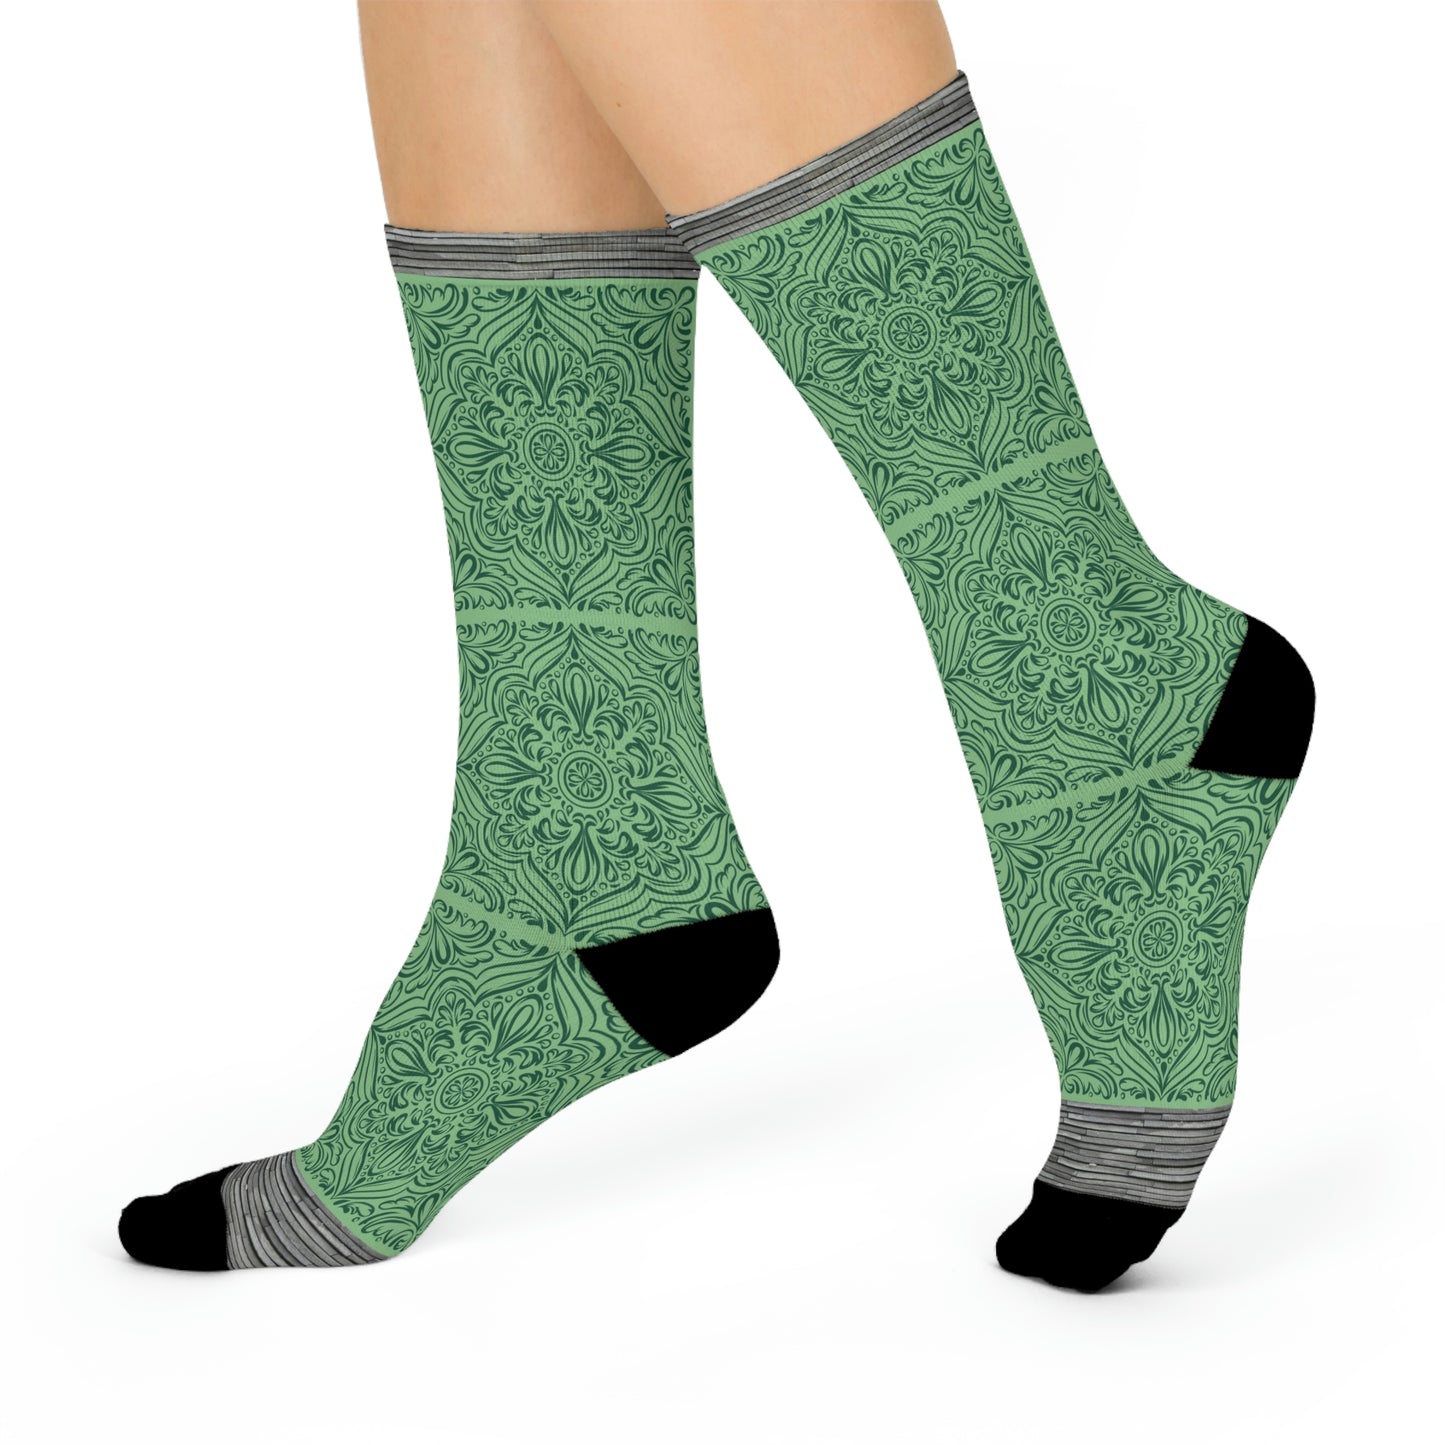 Tile Socks Green Victorian Unisex Adult Stretchy Mid Calf Original